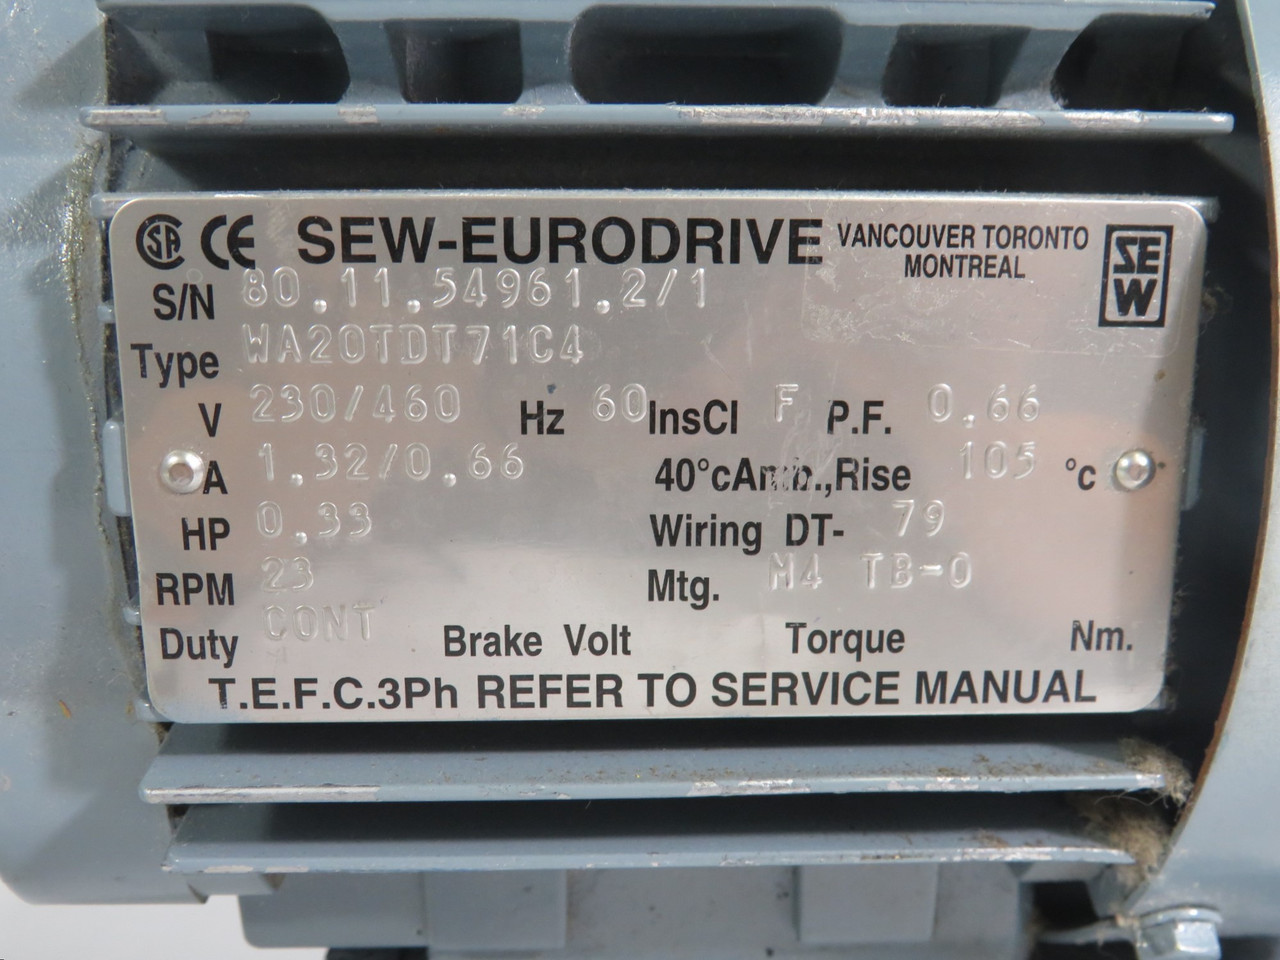 Sew-Eurodrive WA20TDT71C4 0.33HP 23RPM 230/460V 1.32/0.66A 60HZ TEFC 3Ph USED